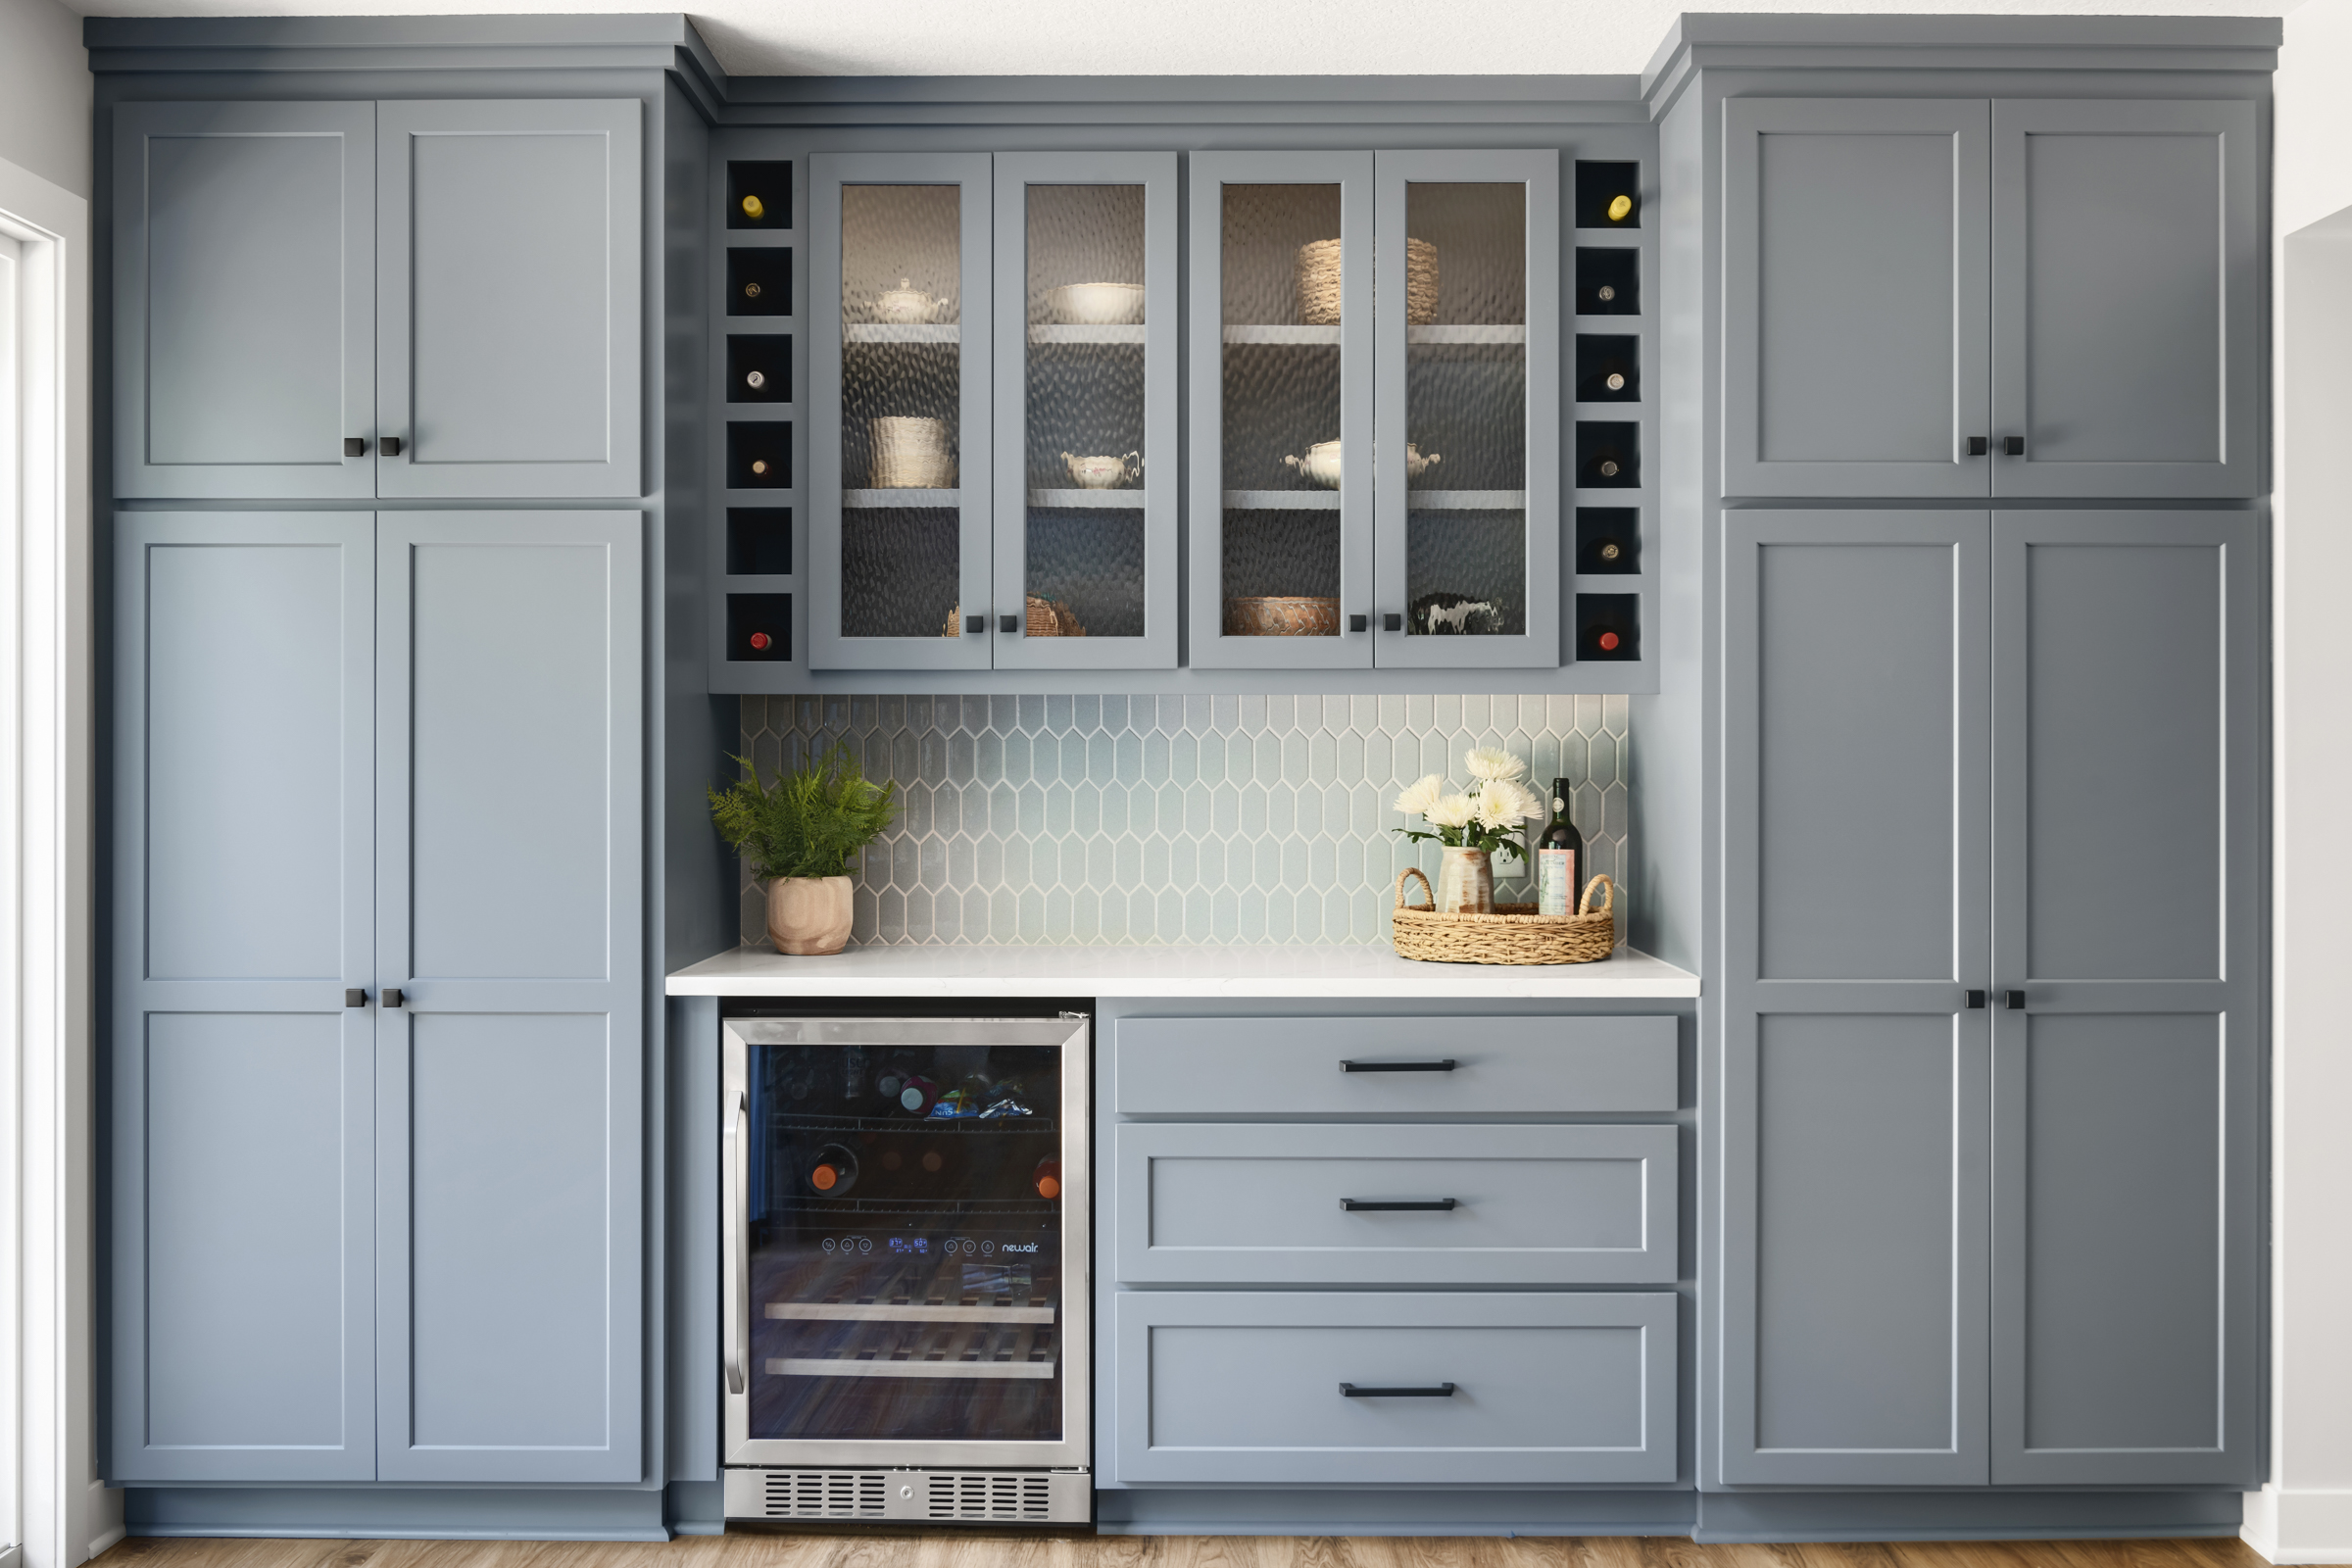 Apple Valley Kitchen & Great Room Remodel by White Birch Design